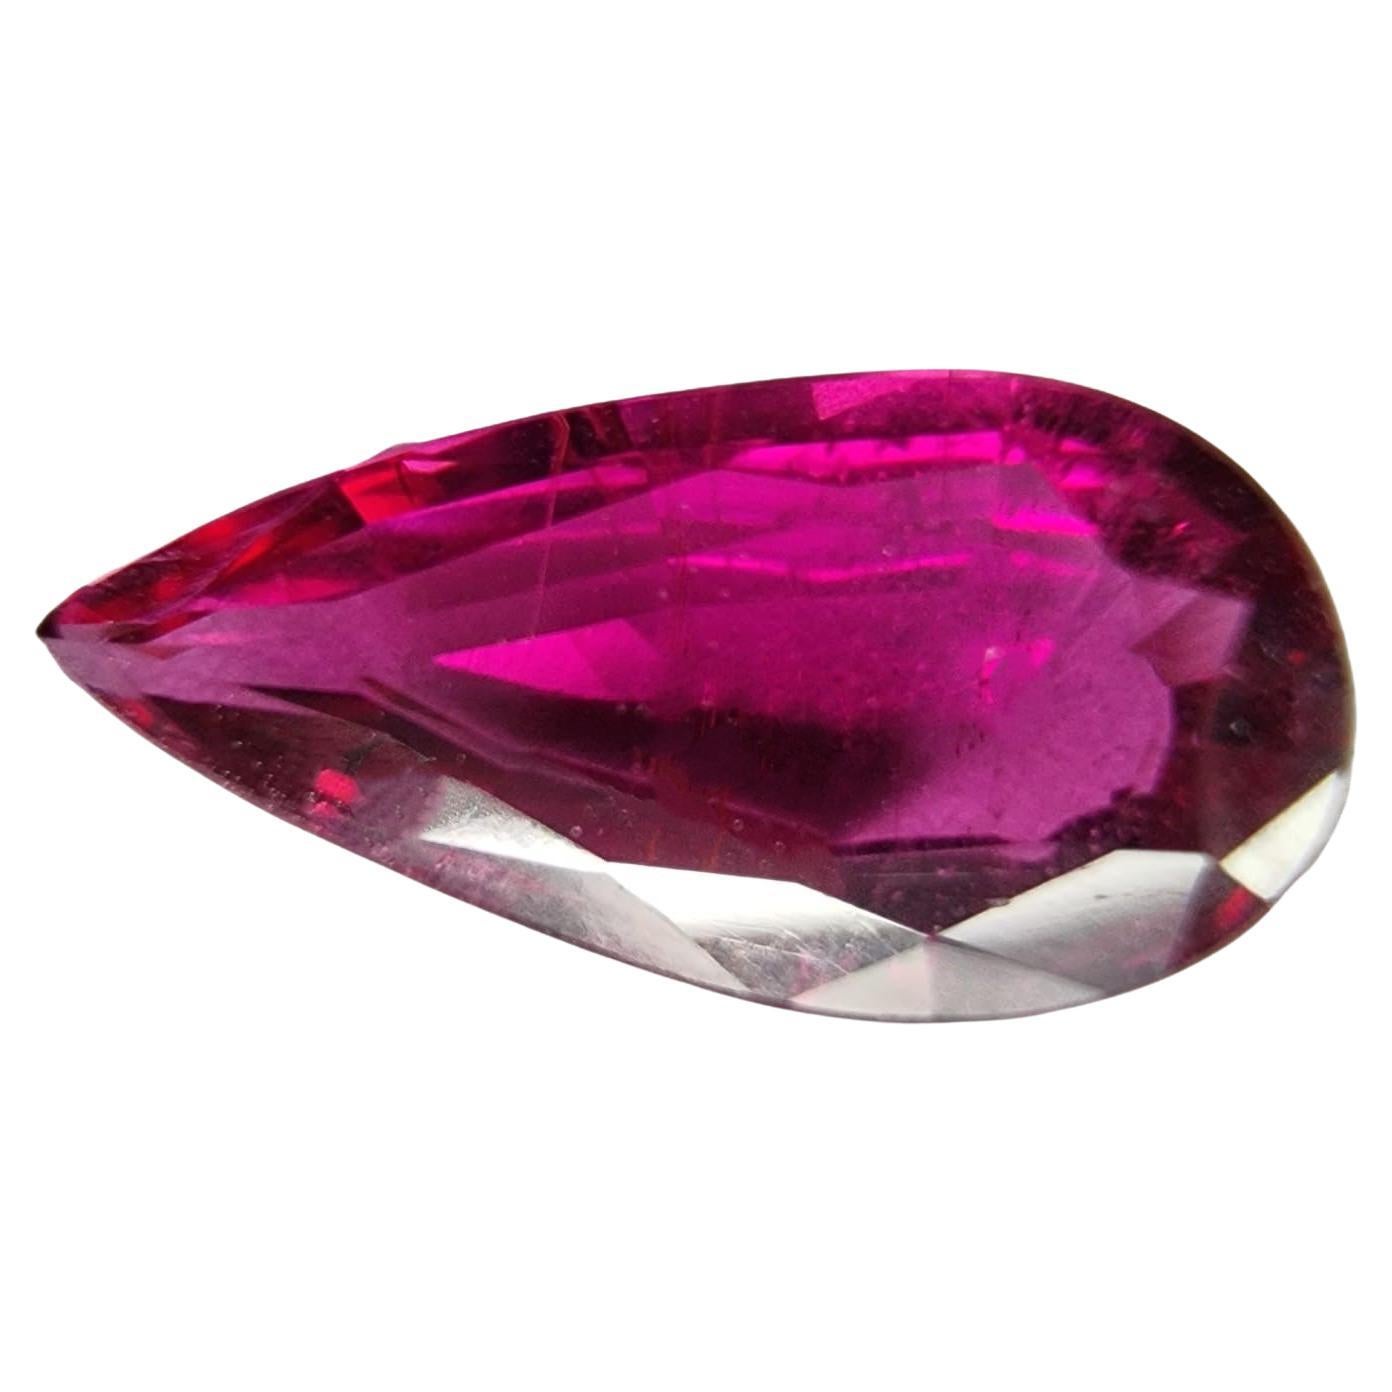 2.95ct Pear Cut Pinkish Red Rubellite Tourmaline Gemstone For Sale